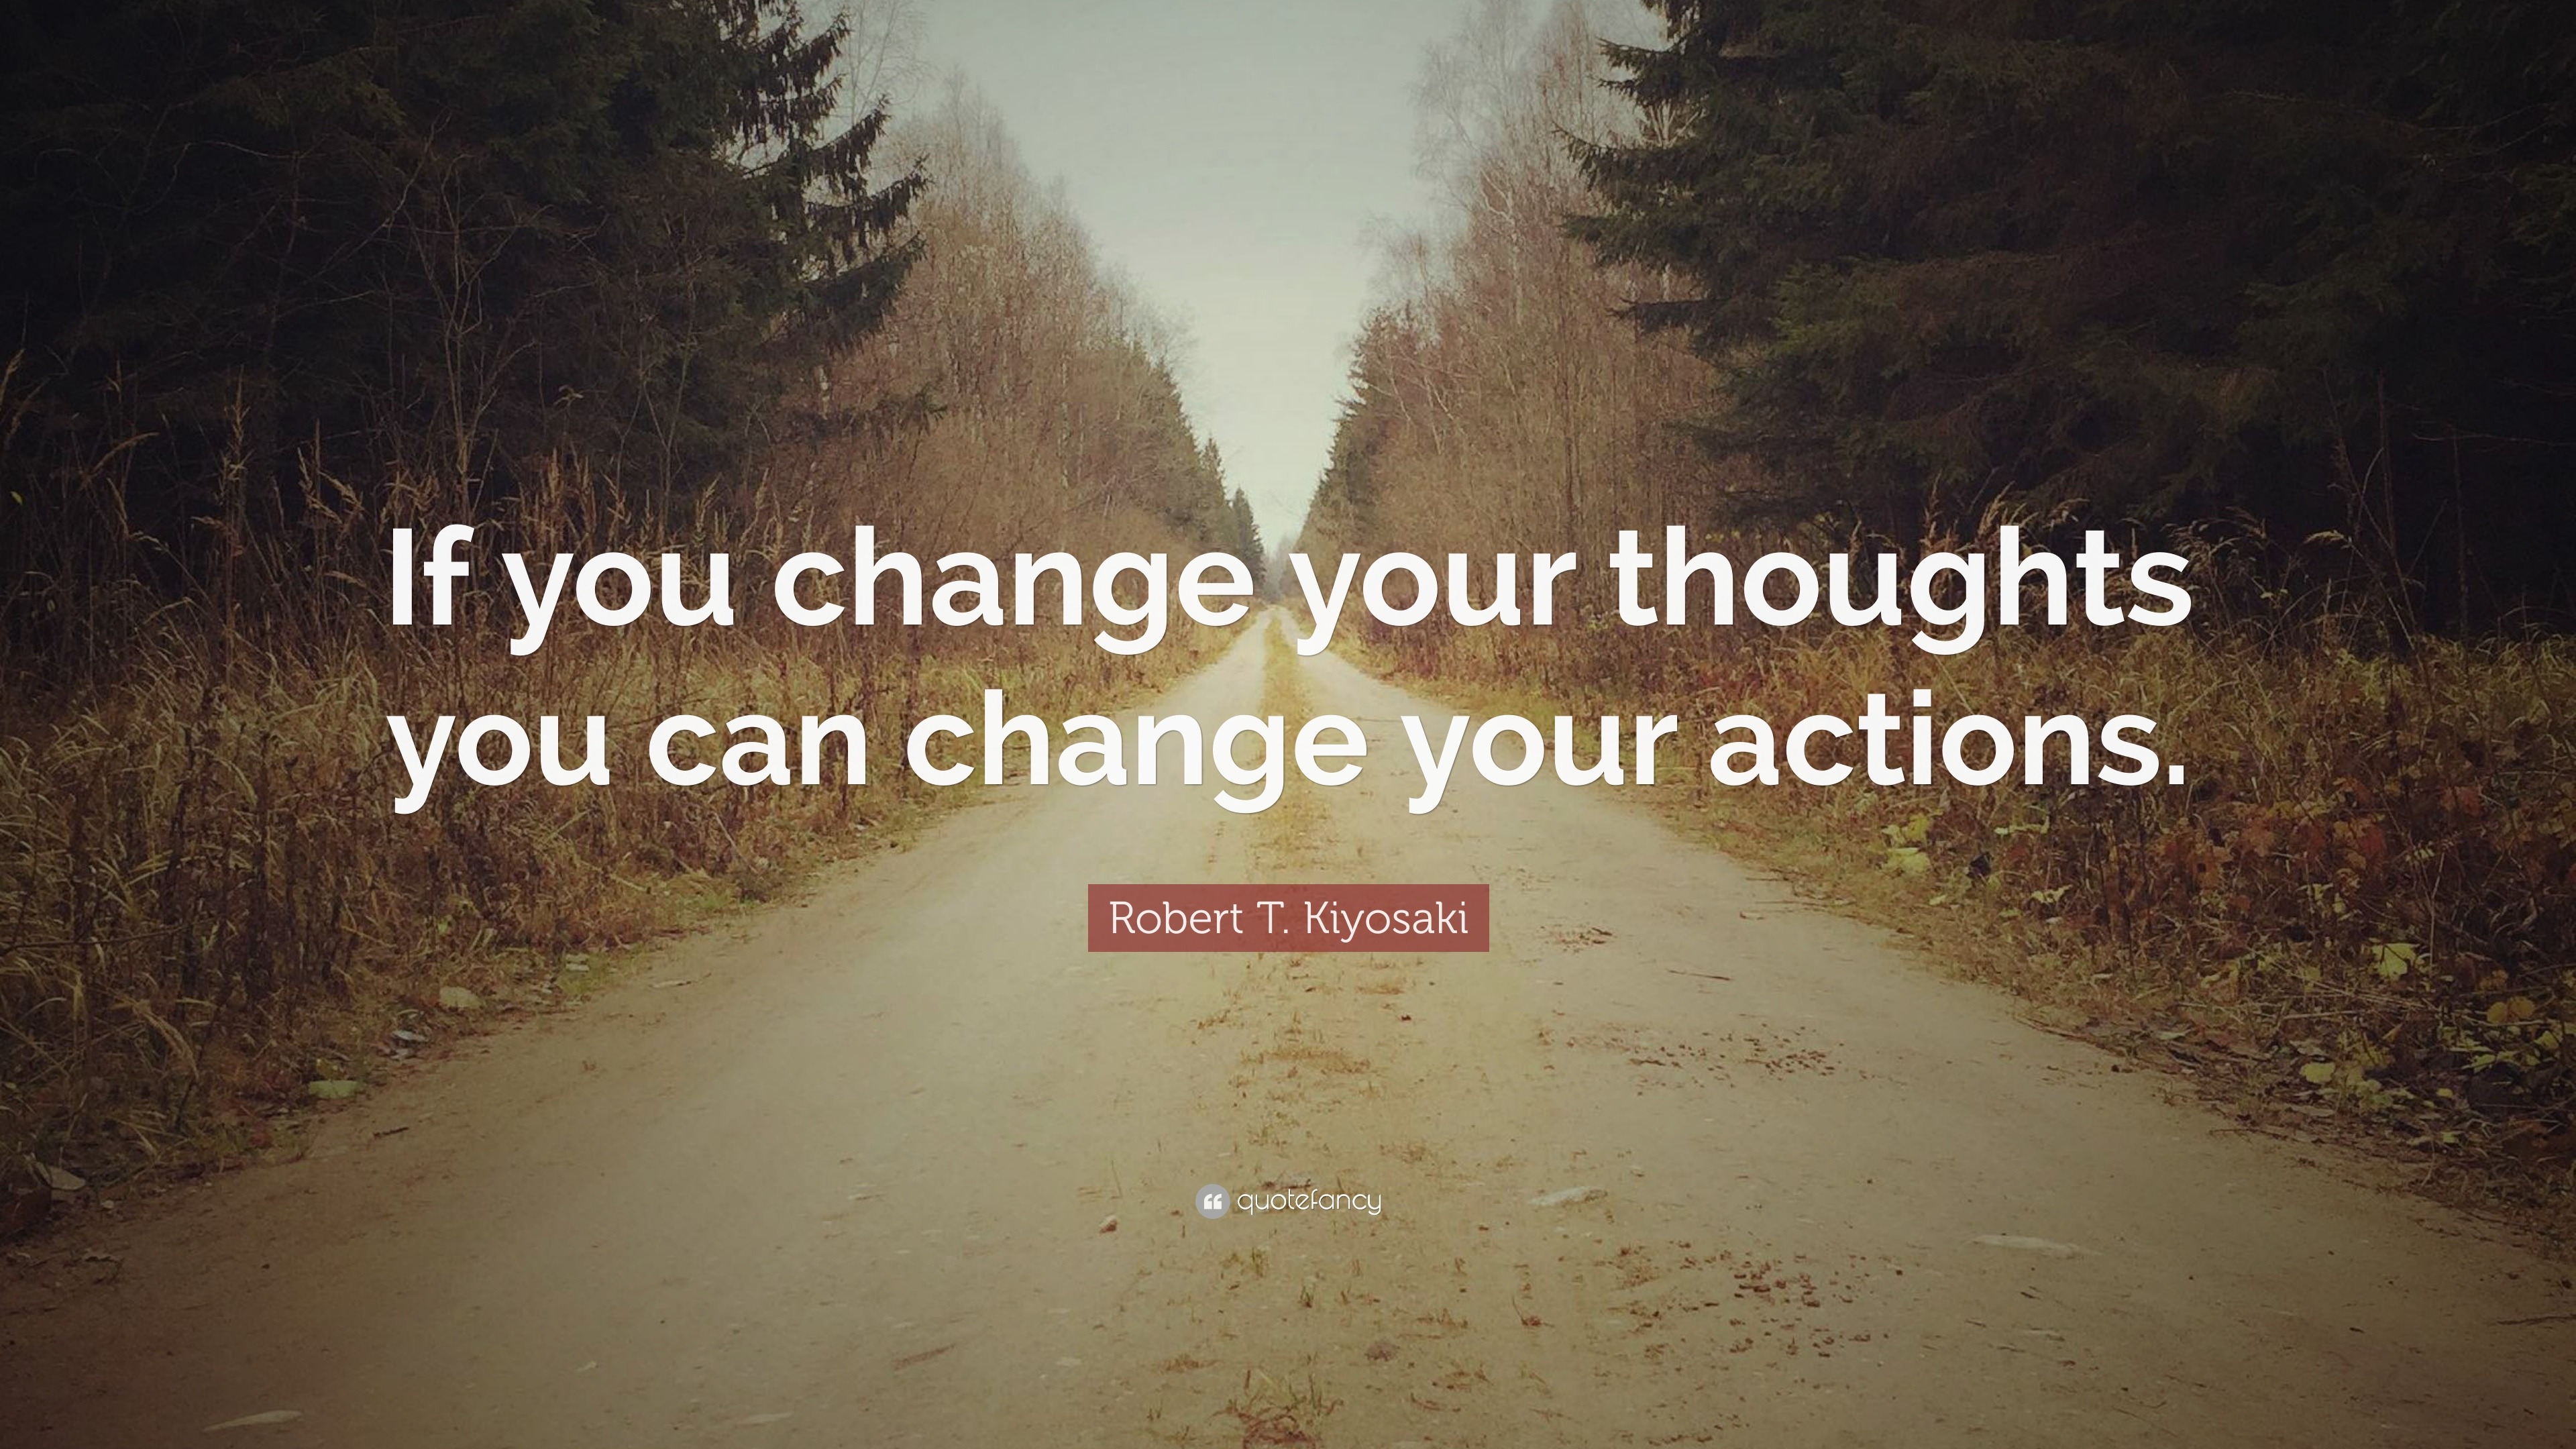 Robert T. Kiyosaki Quote: “If you change your thoughts you can change ...